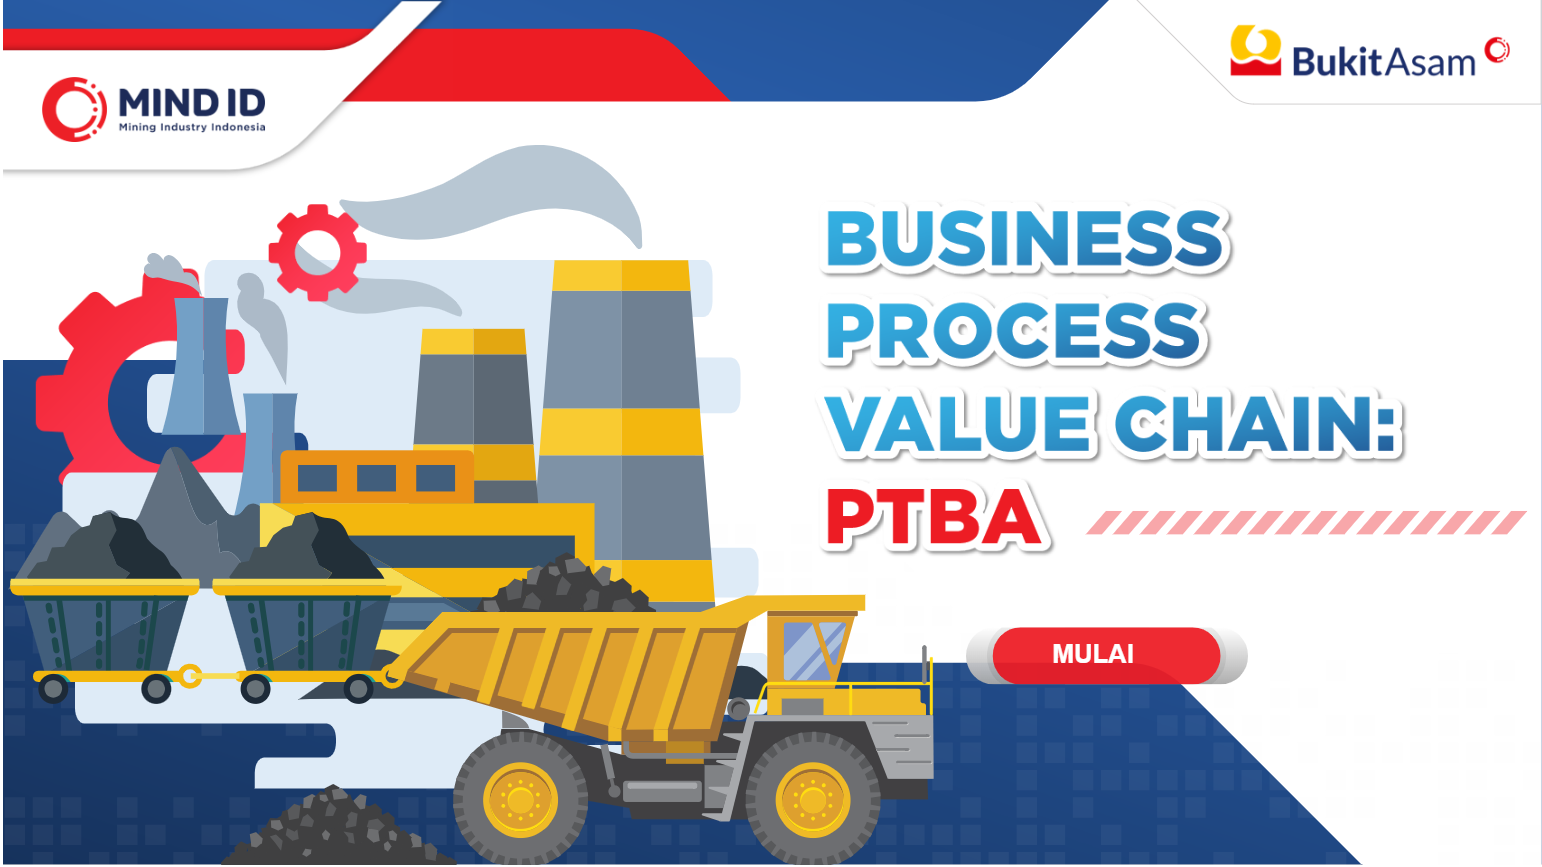 Bukit Asam Business & Value Chain